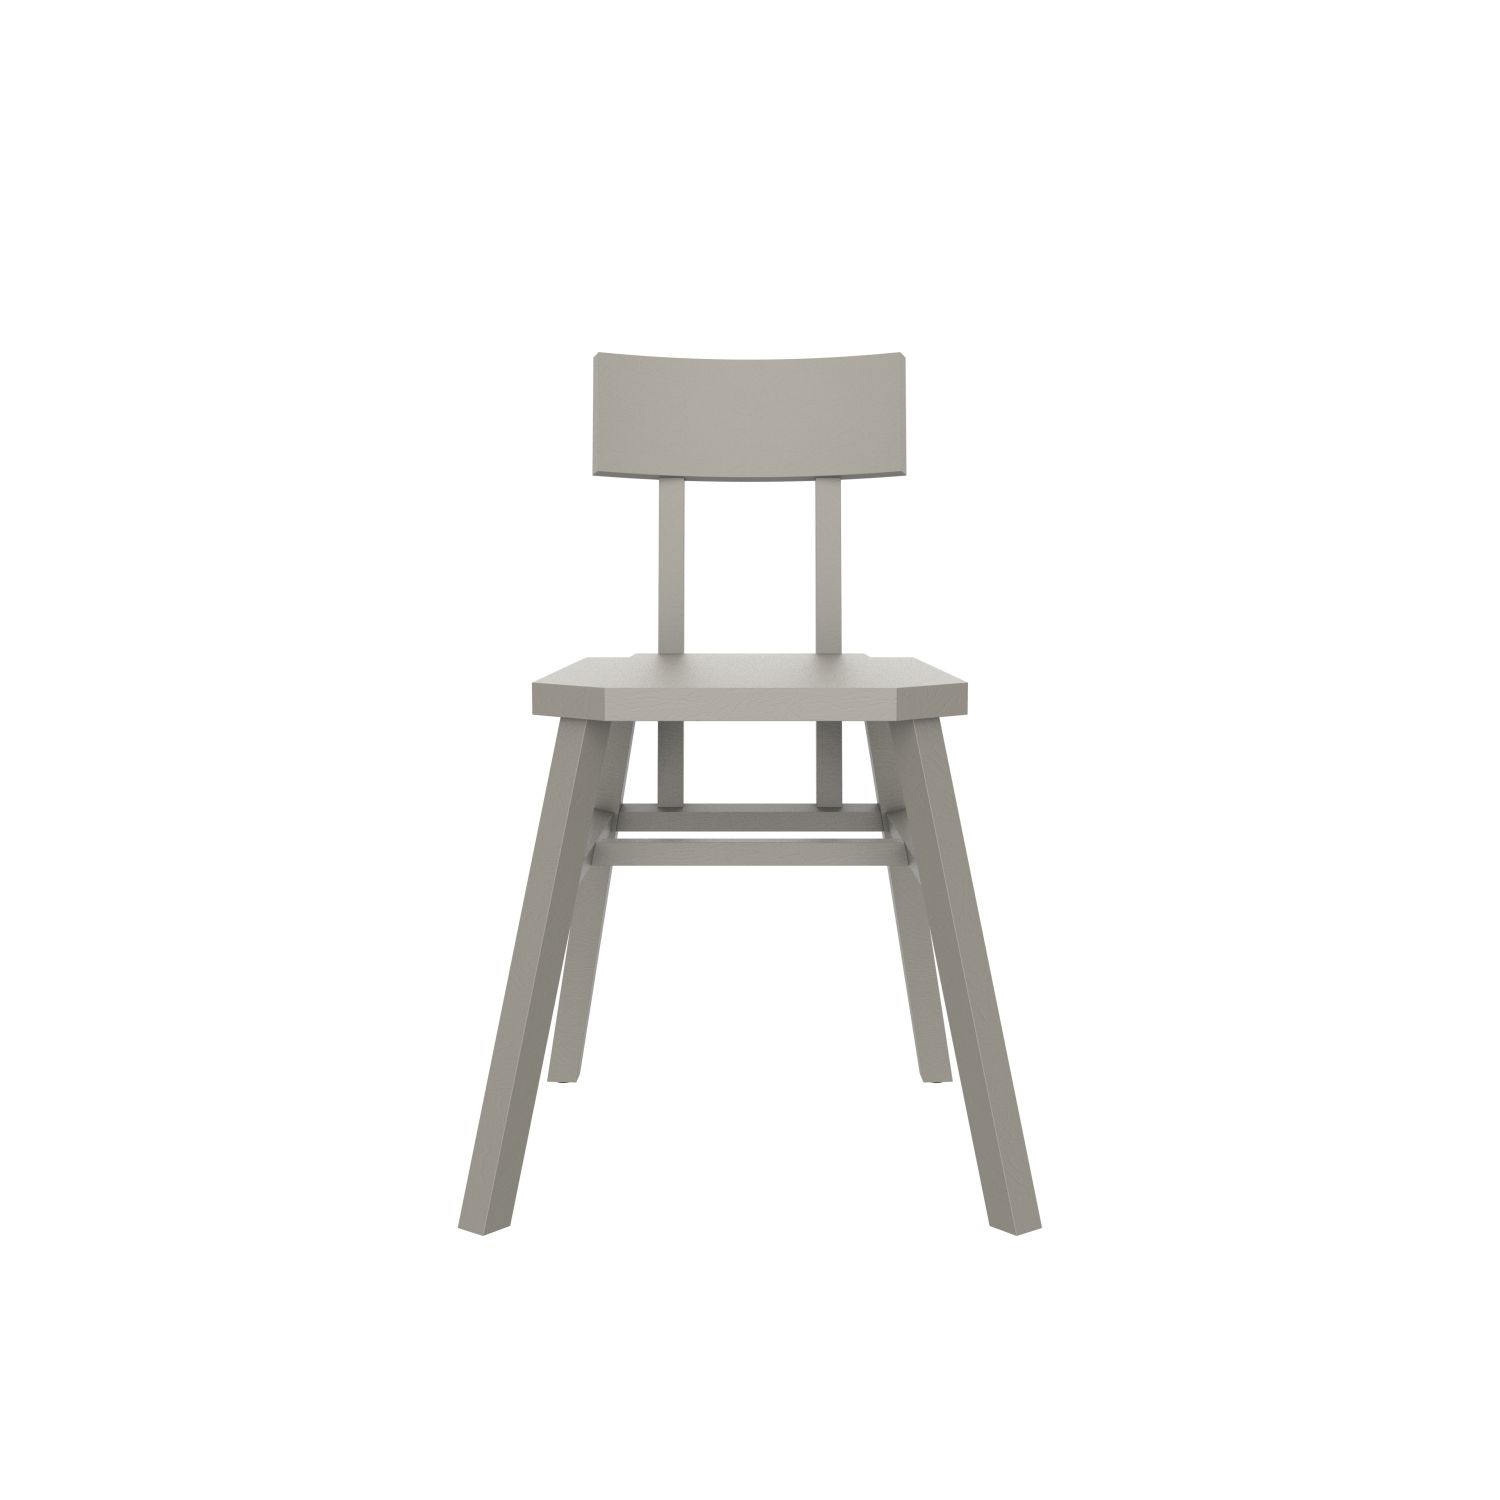 avl spider chair stone grey